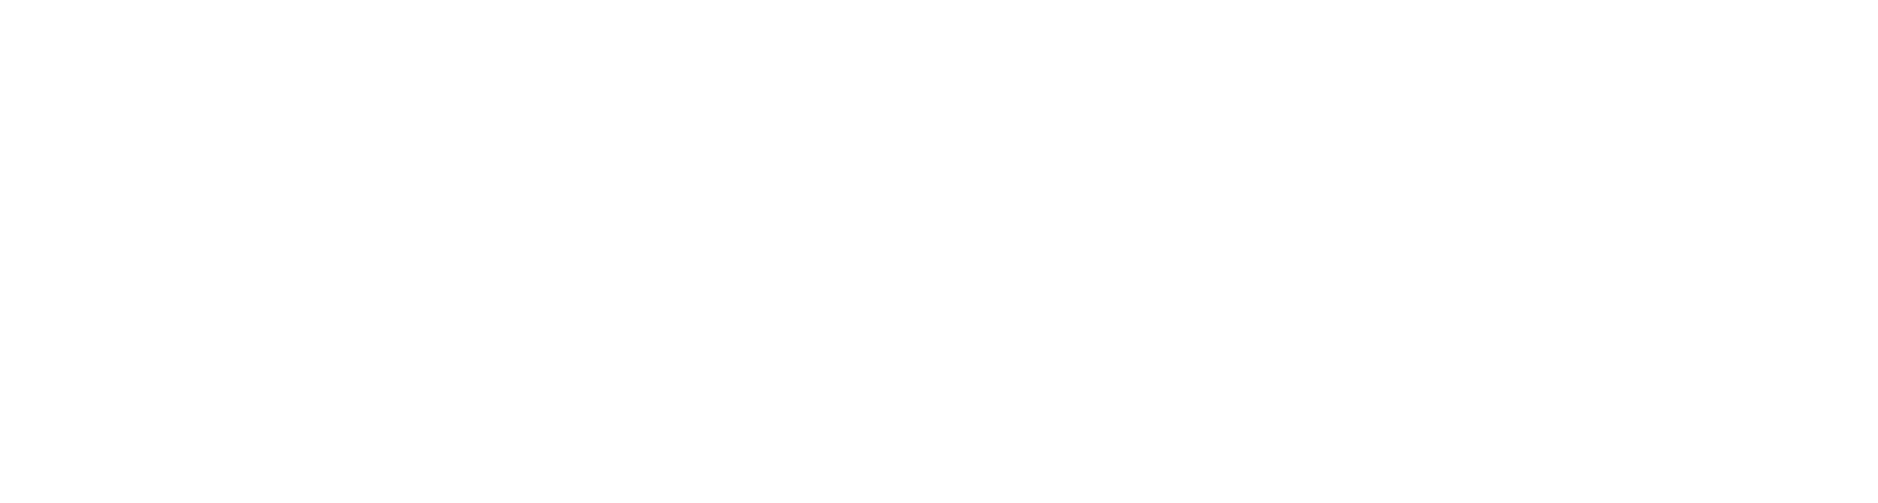 Busar malaysia